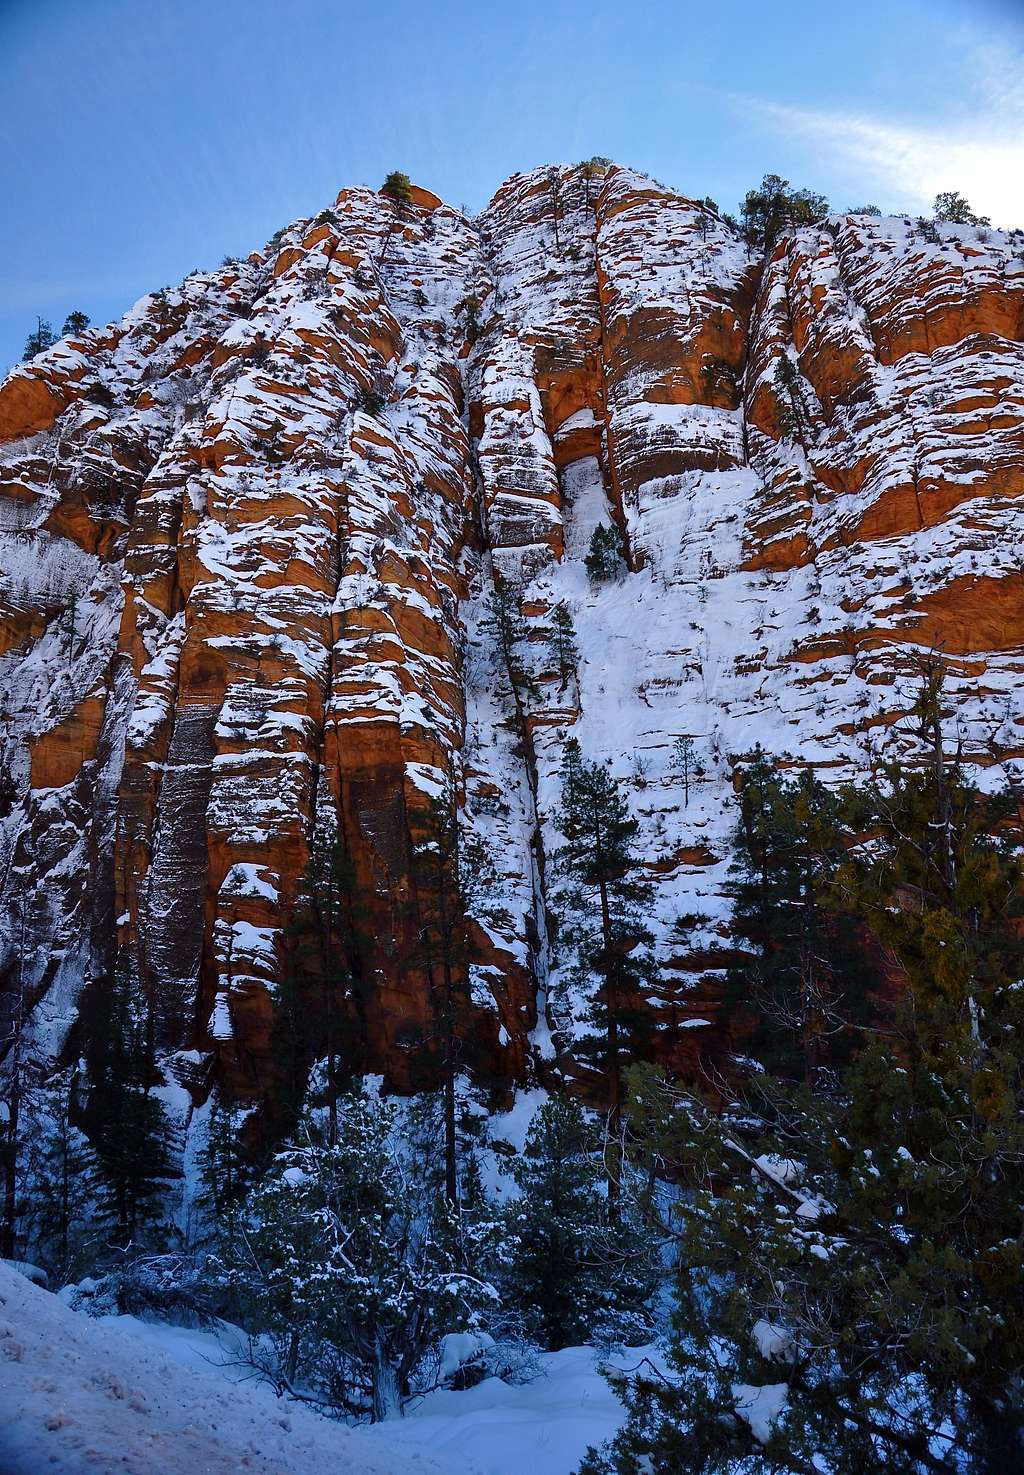 Red Cliffs of Utah